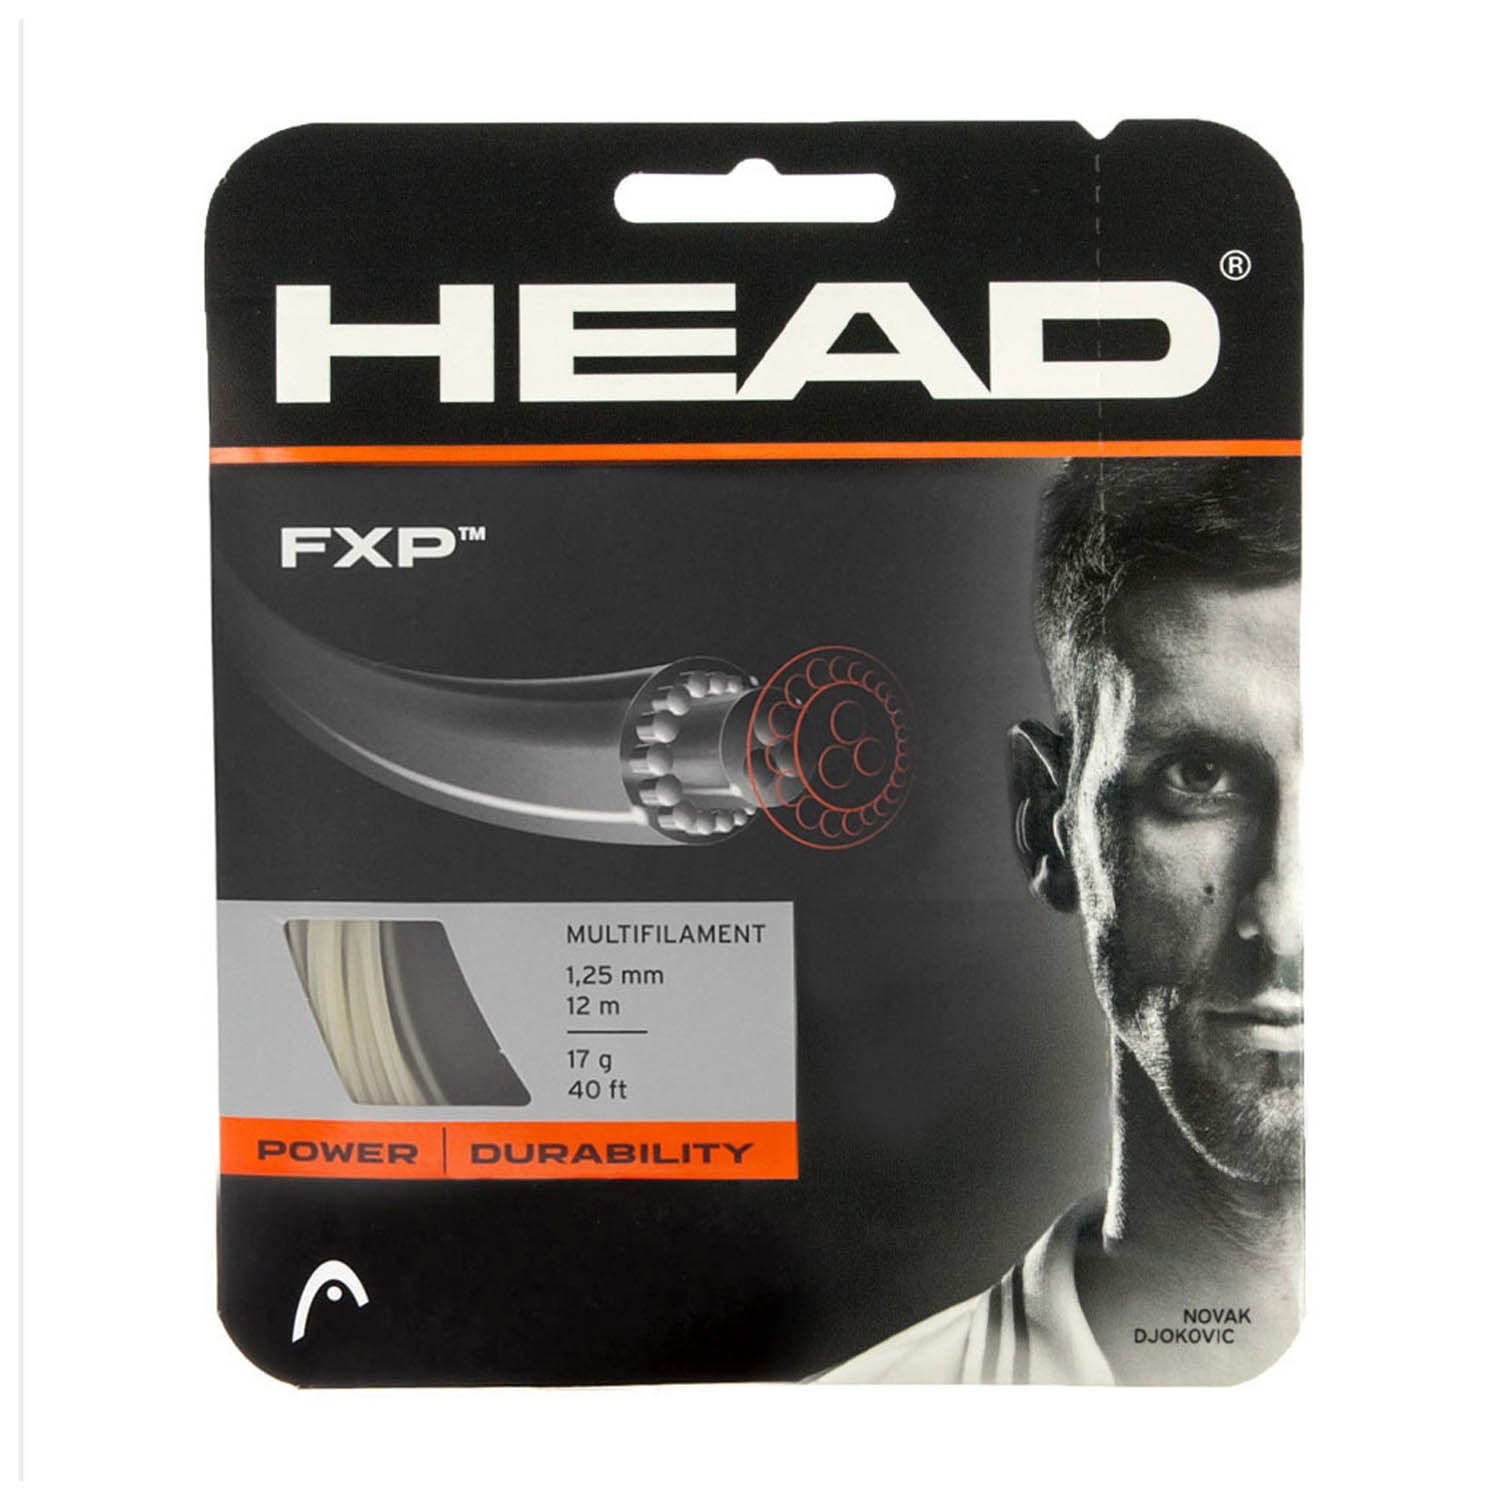 Head FXP 1.25 Set 12 m - Natural